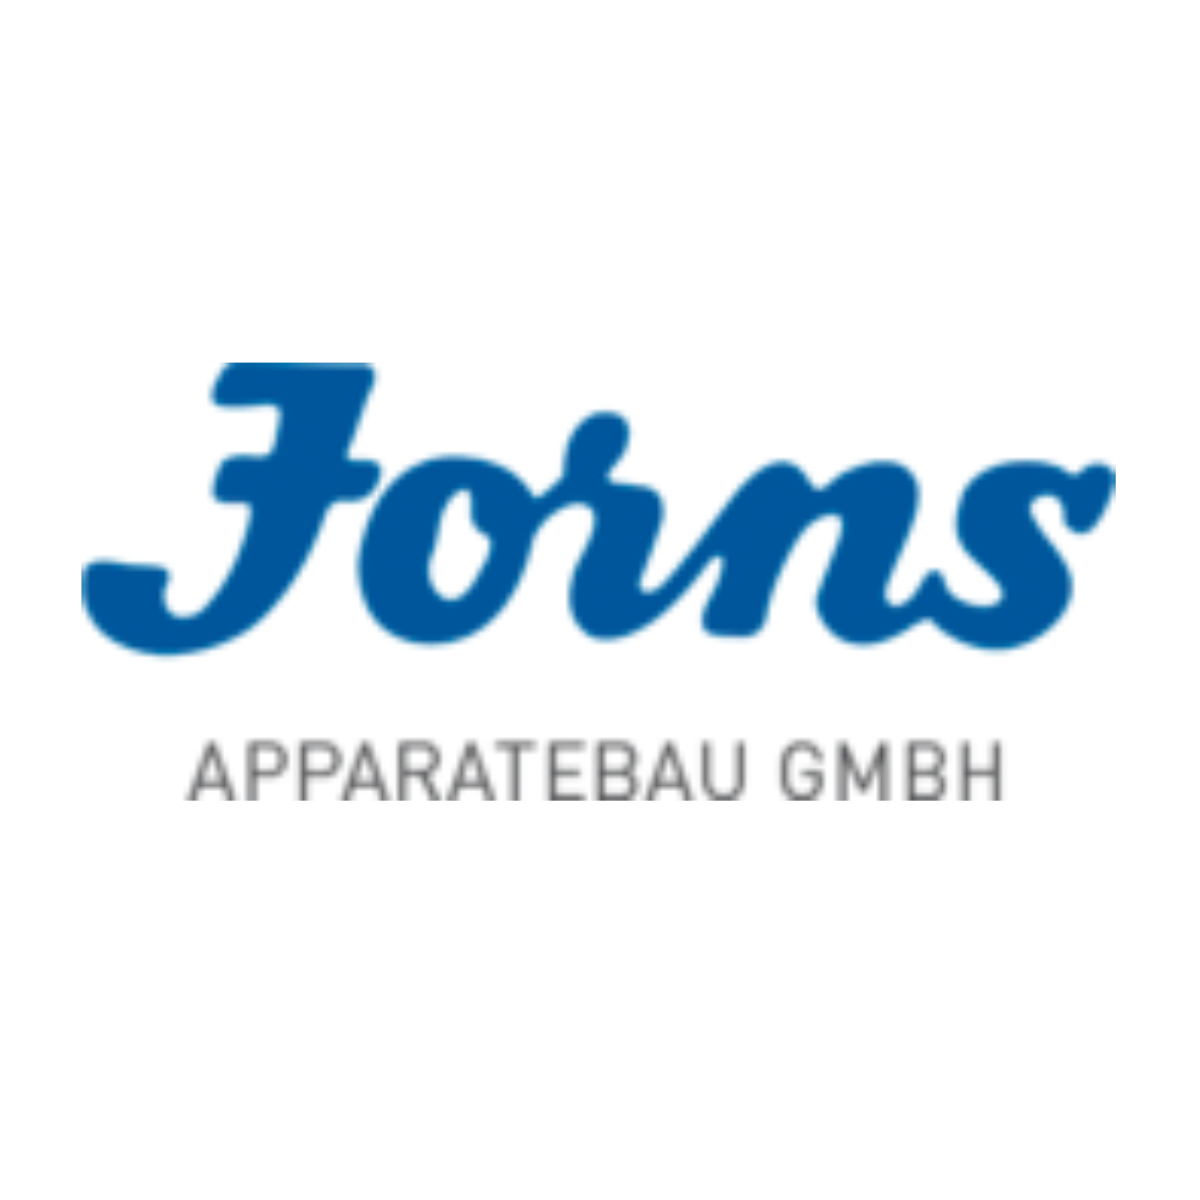 Jorns Apparatebau GmbH logo